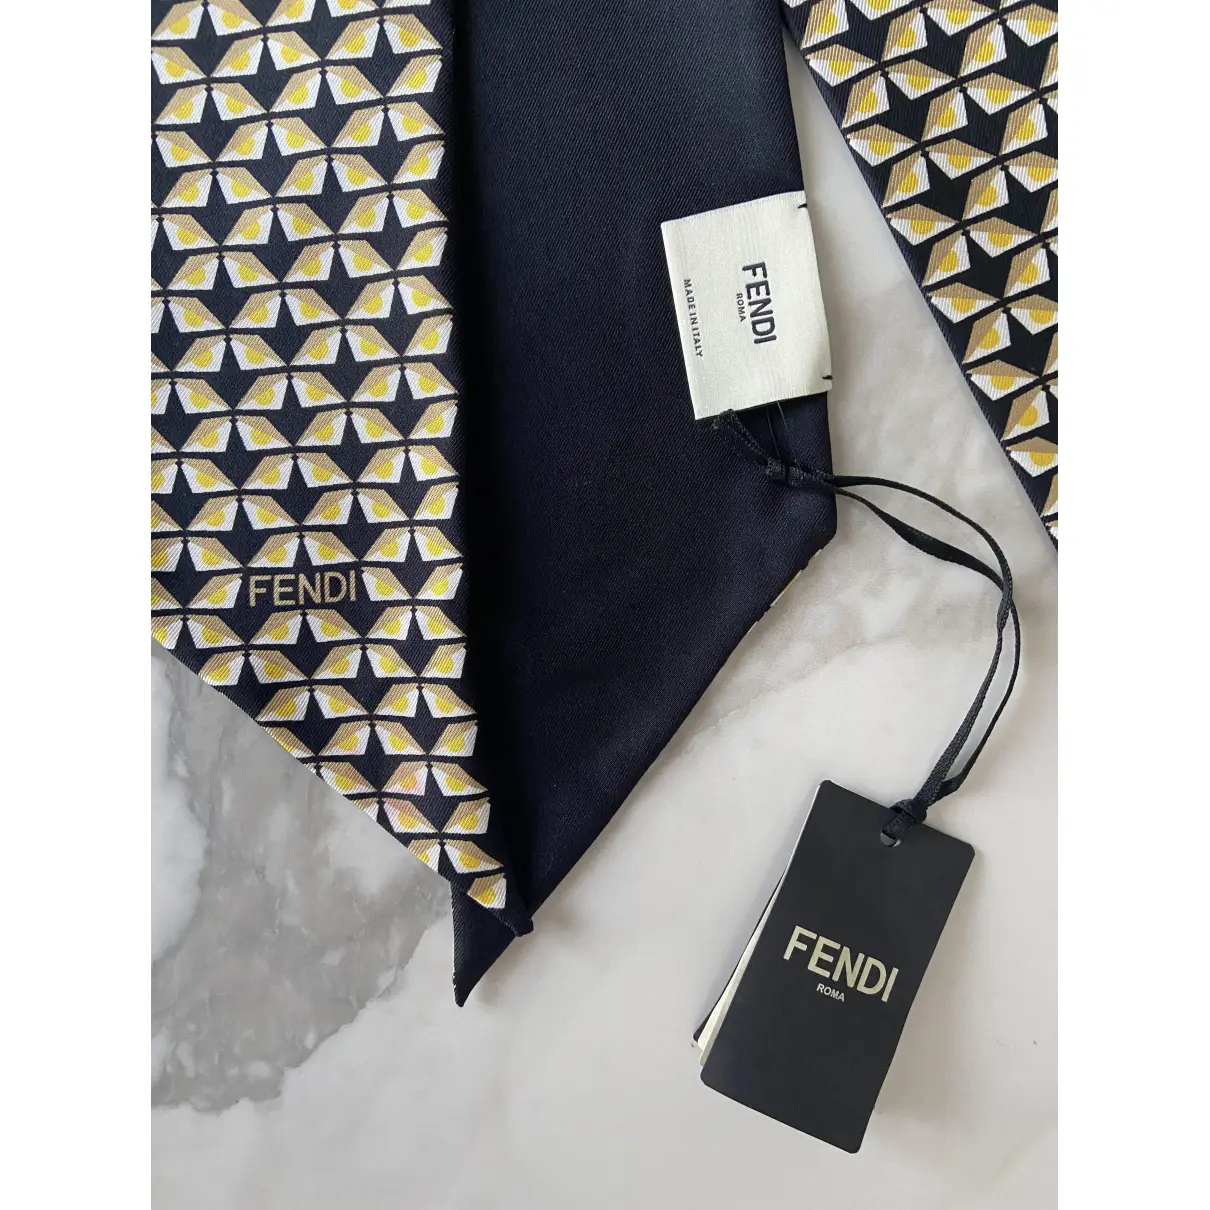 Buy Fendi Silk choker online